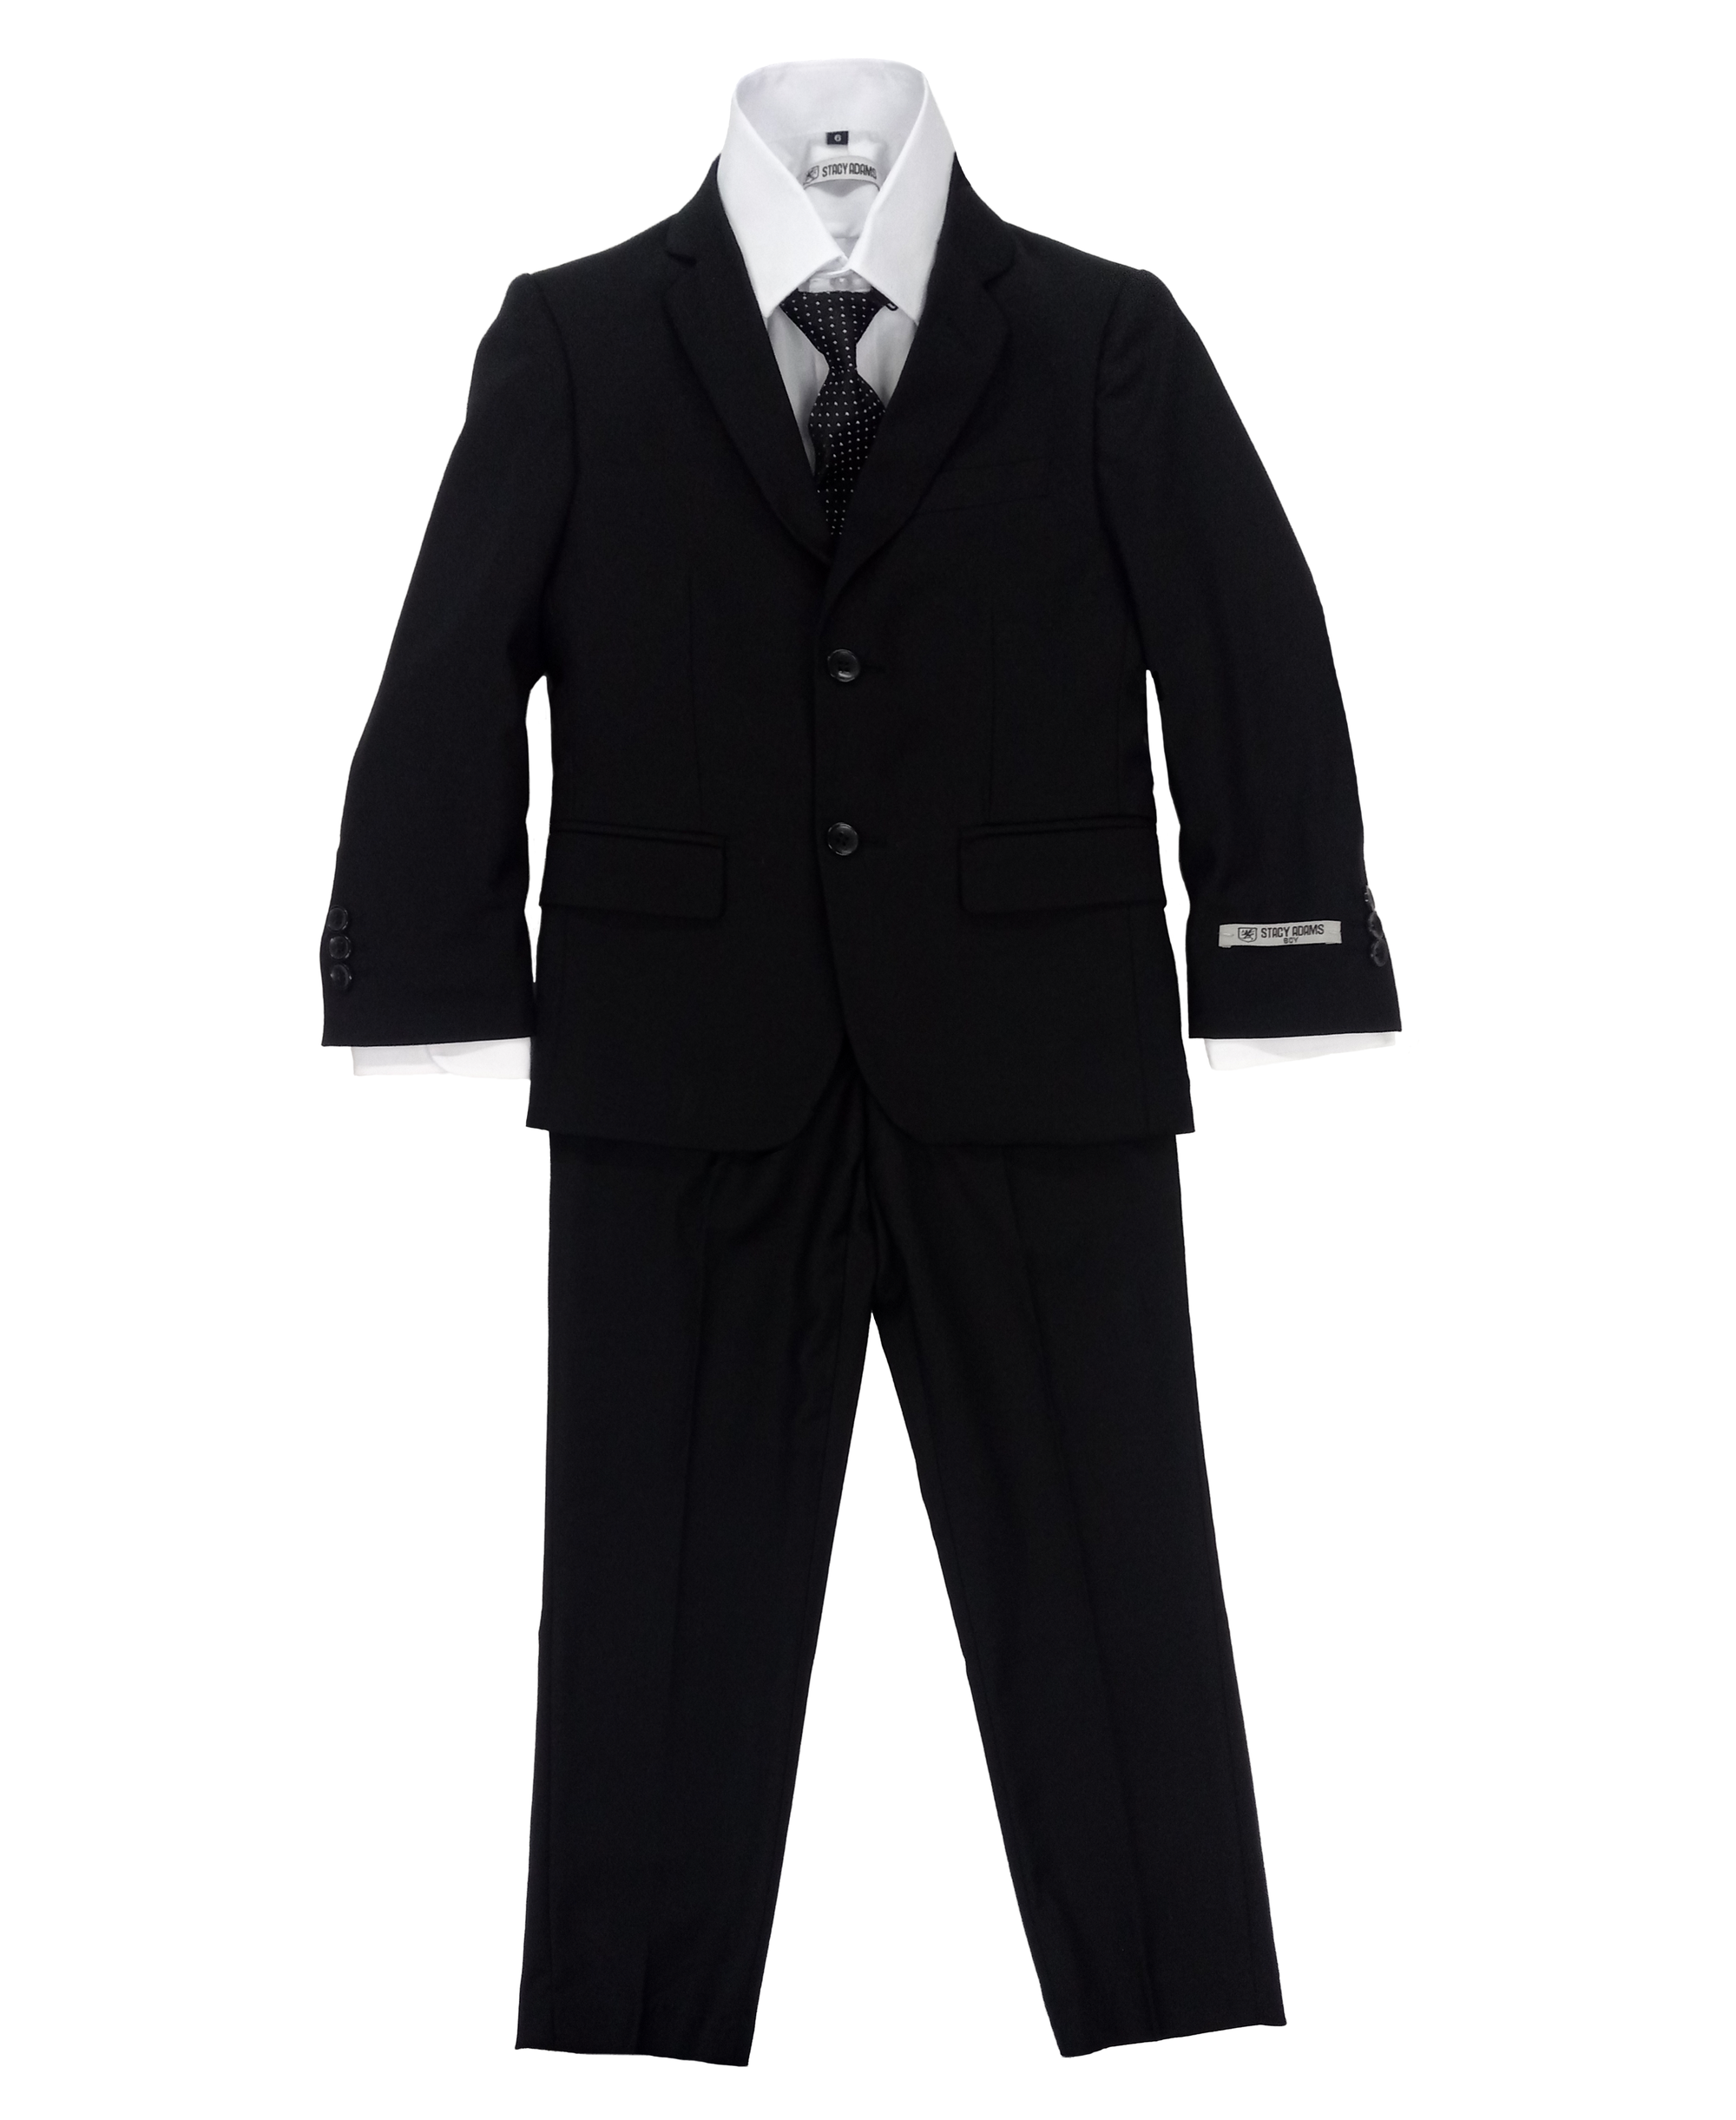 Boys Stacy Adams Black 5 pc Suits